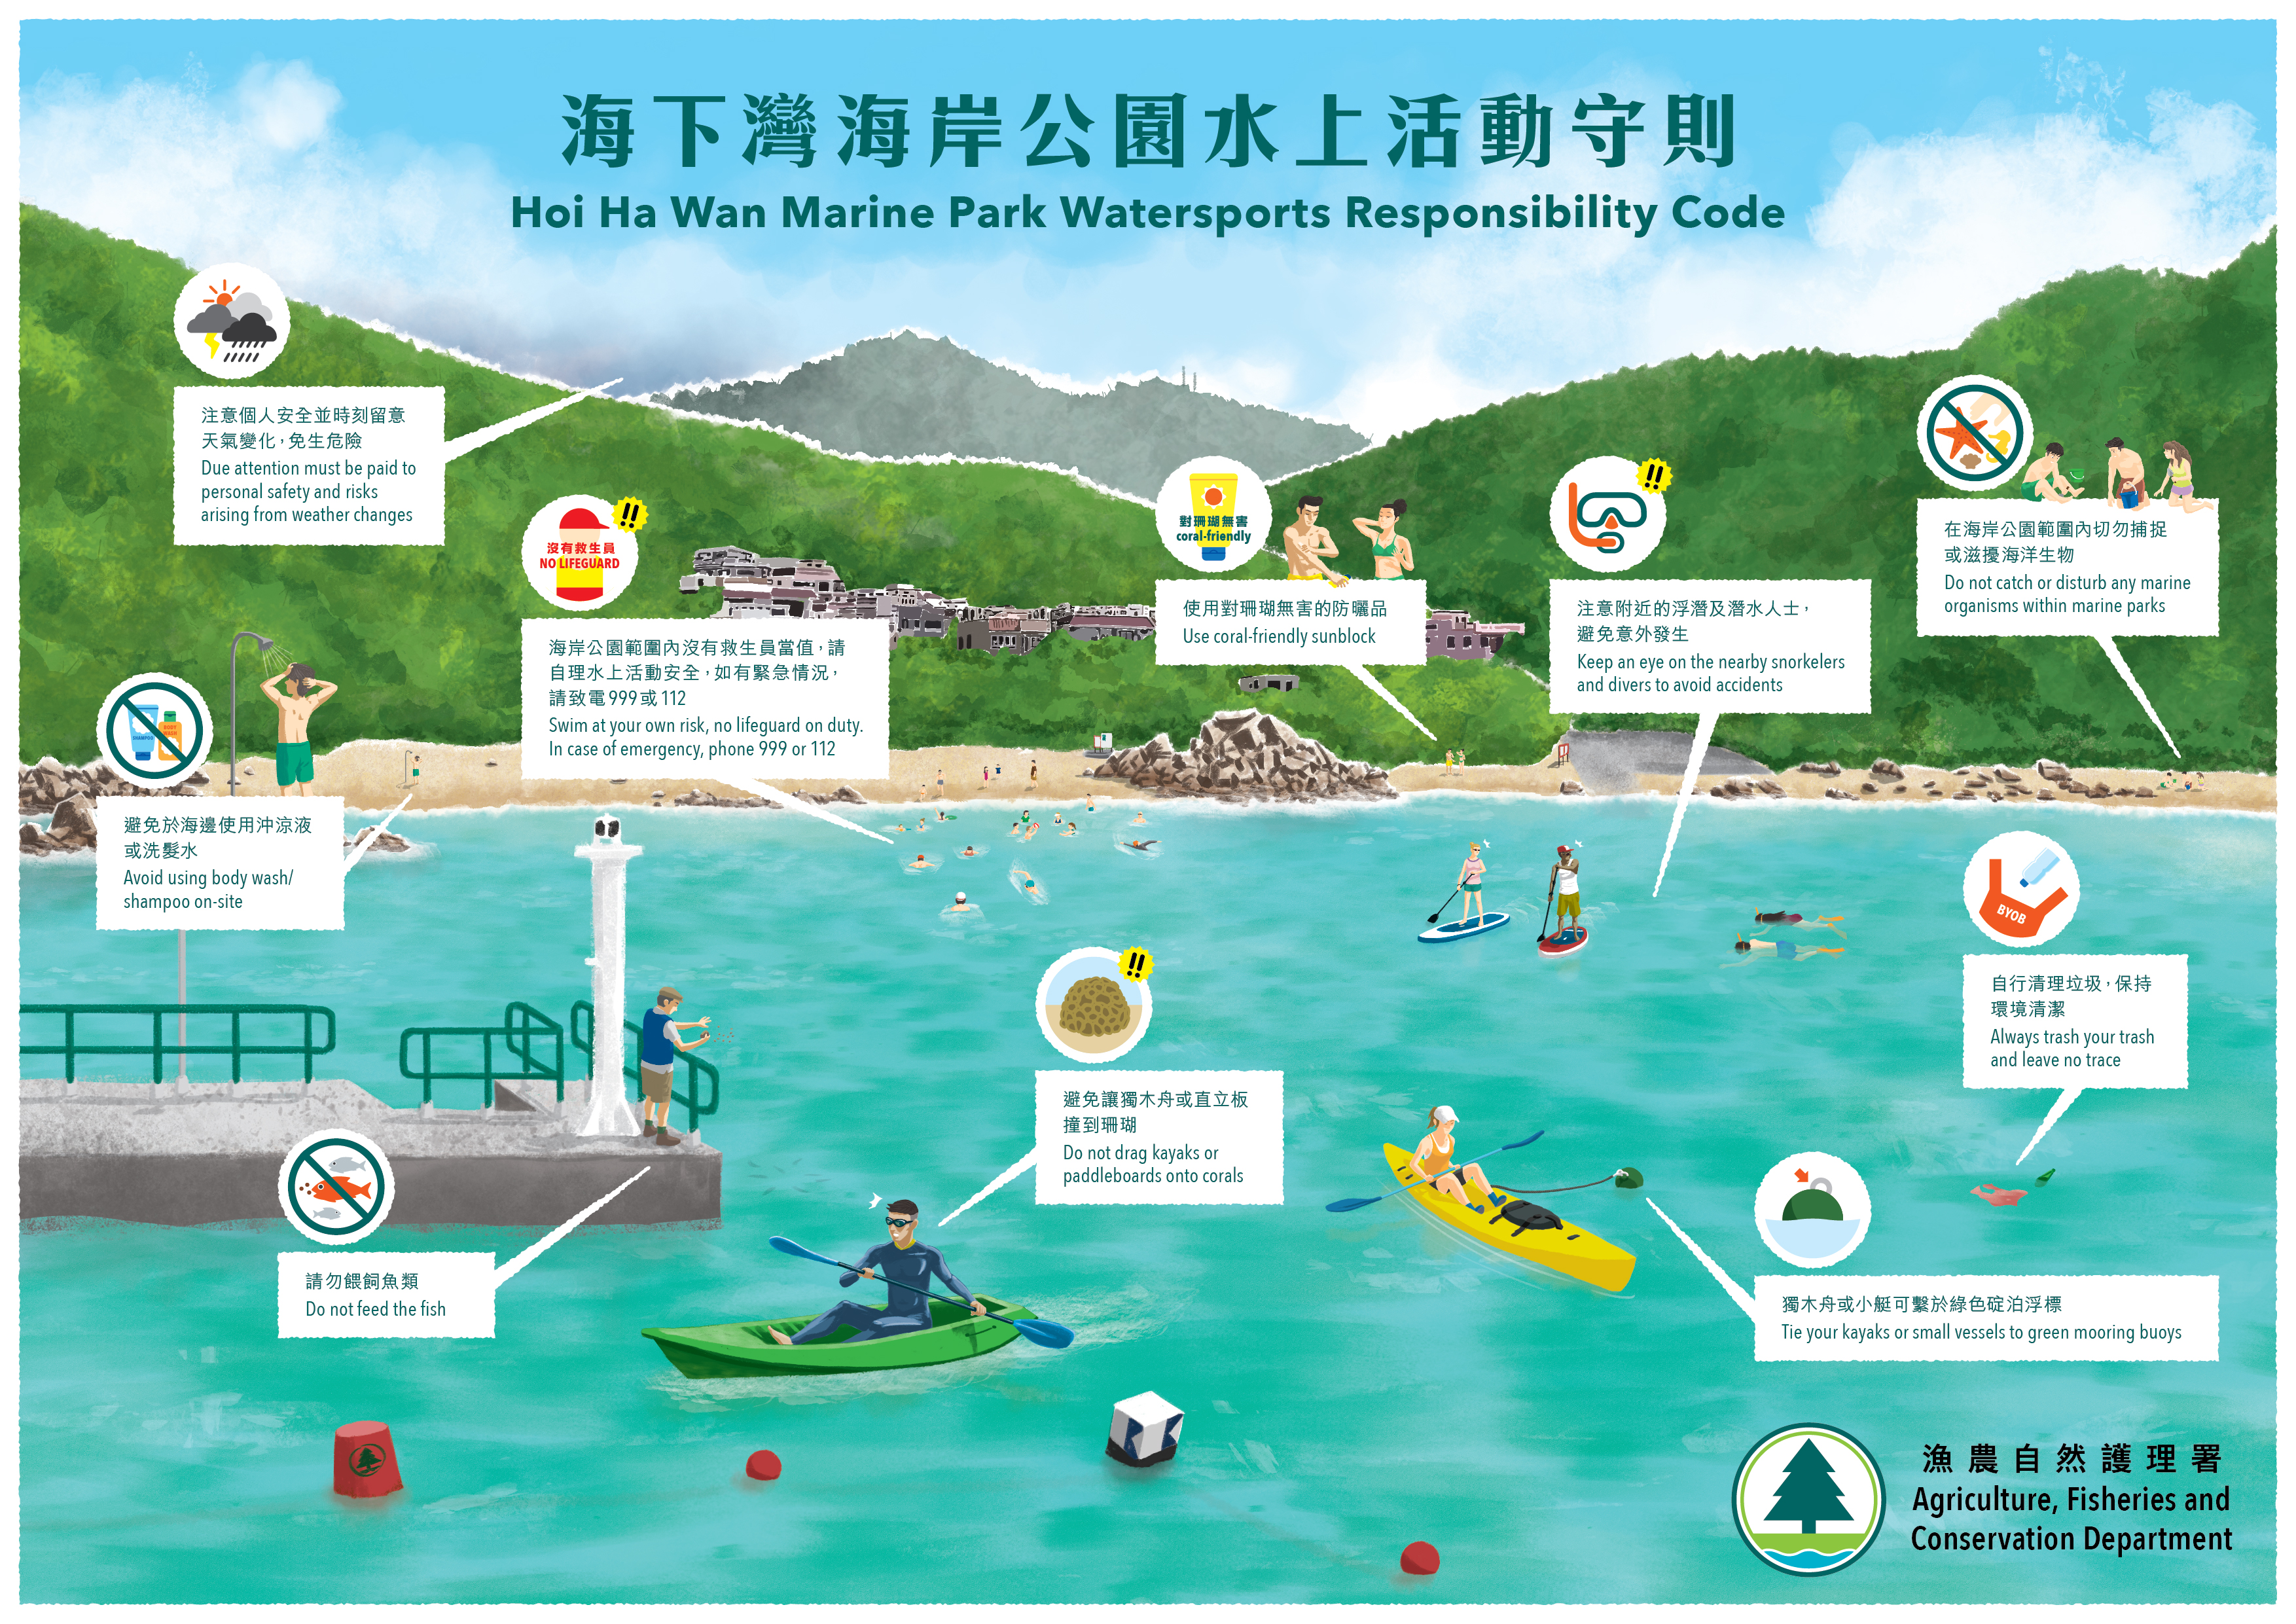 Hoi Ha Wan Marine Park Watersports Responsibility Code